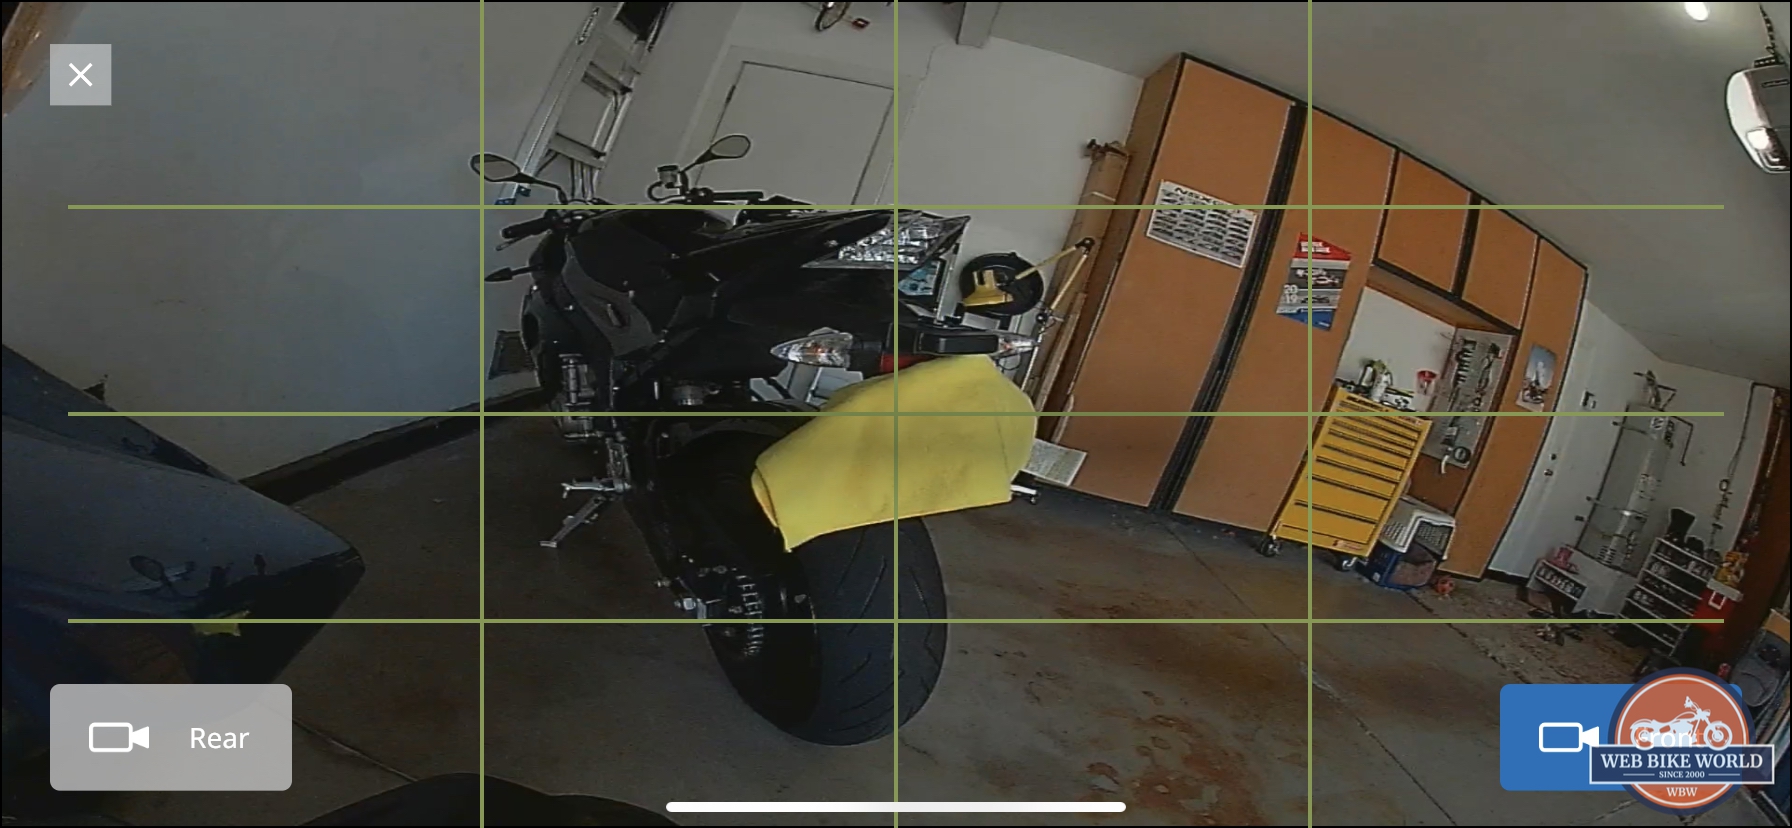 Image angle adjustment feature on Kenwood STZ-RF200WD Dual Camera System